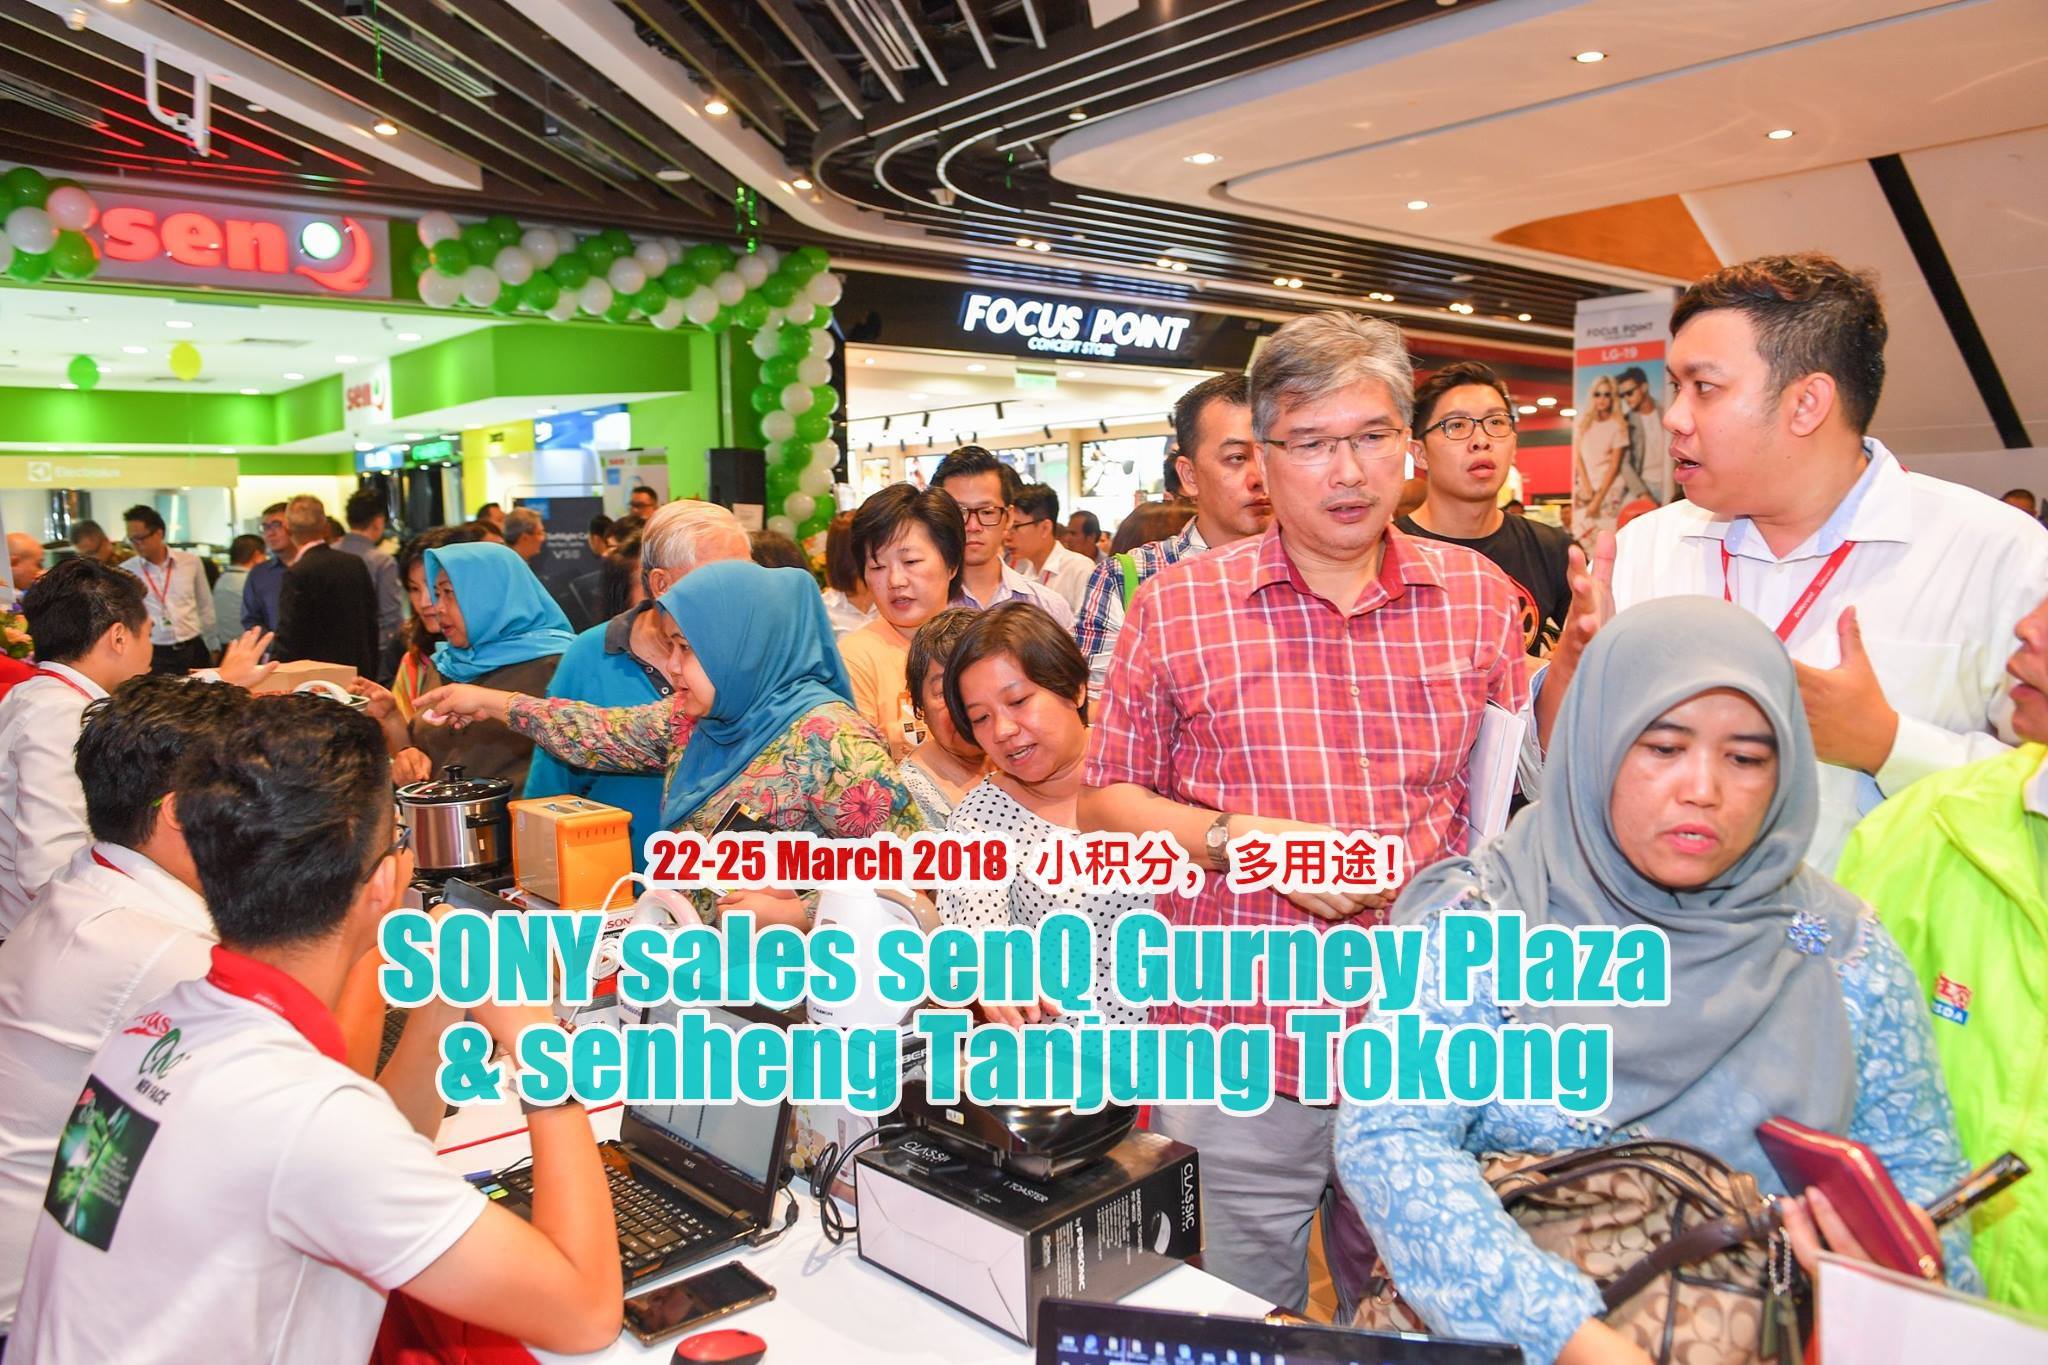 senQ Gurney Plaza and senheng Tanjung Tokong SONY sales